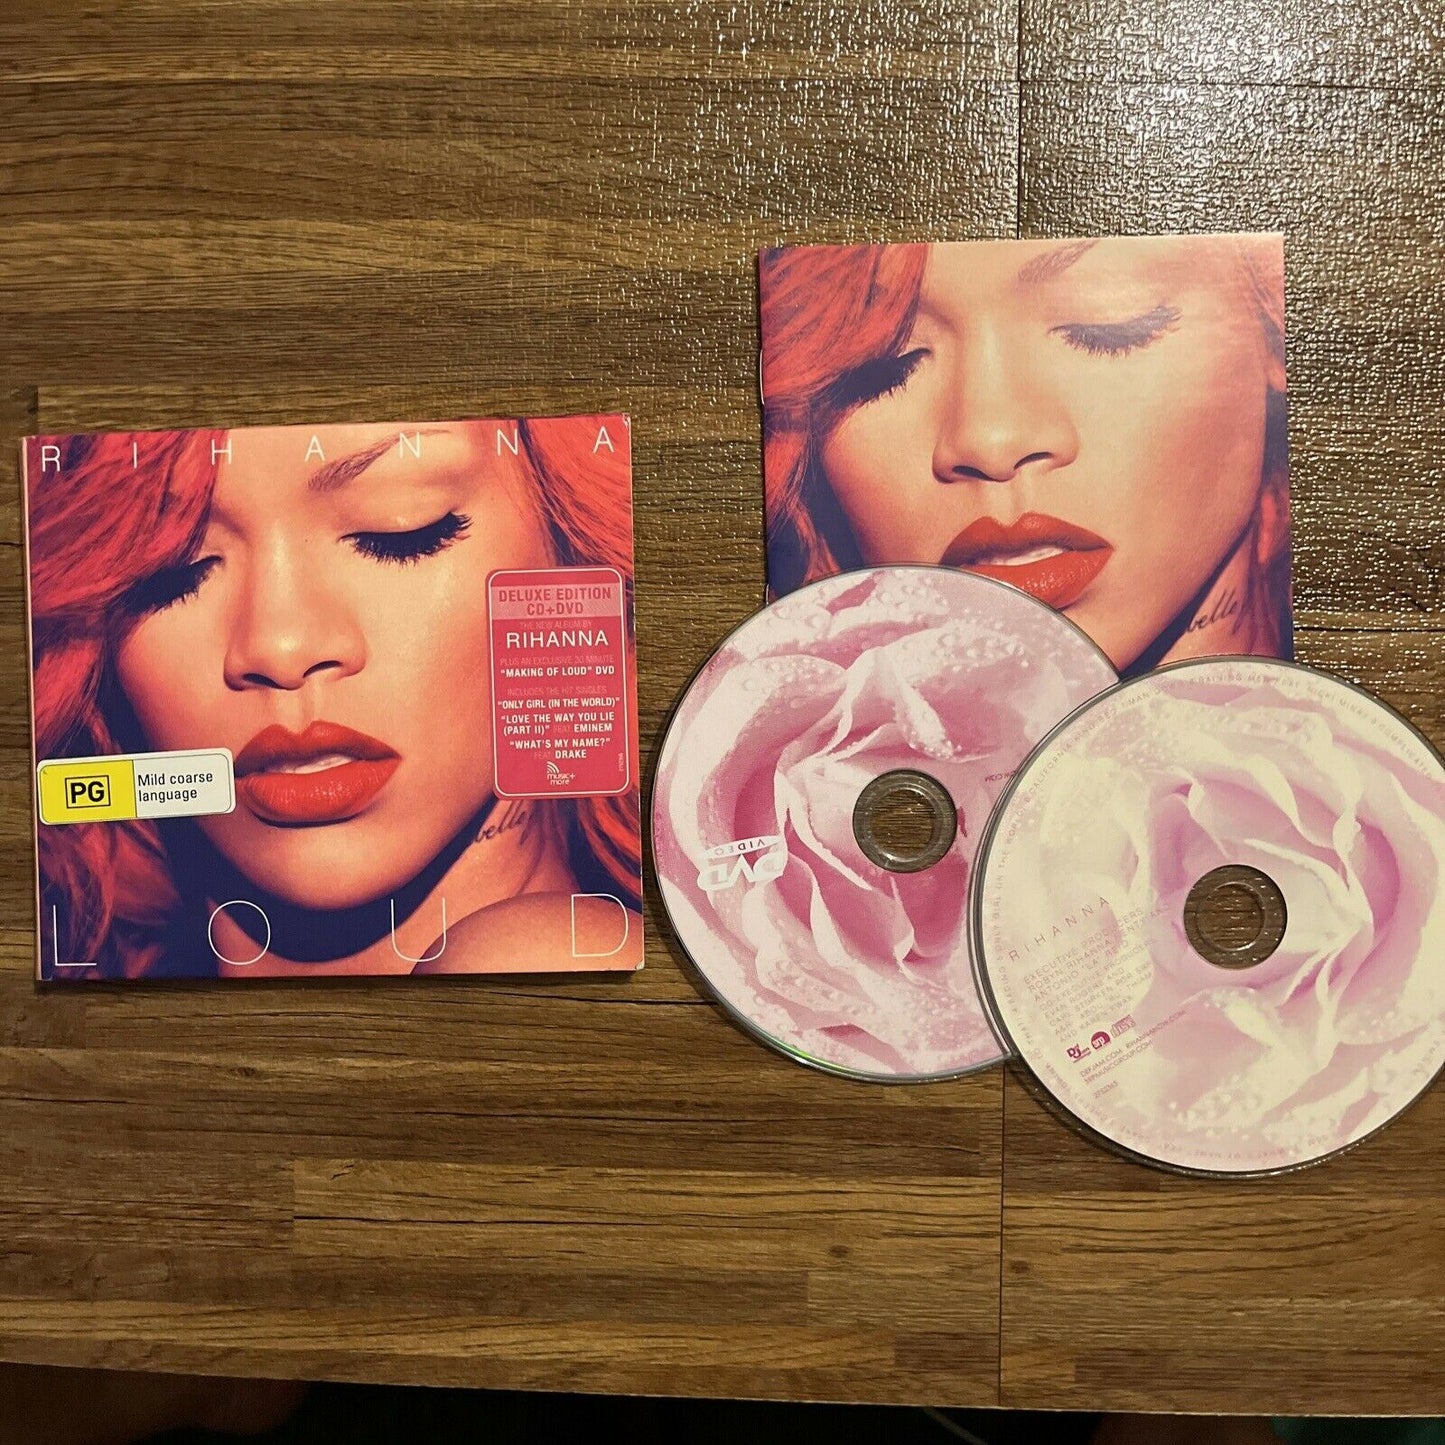 Rihanna - Loud - Deluxe Edition (CD + DVD, 2010, 2-Disc) Digipak